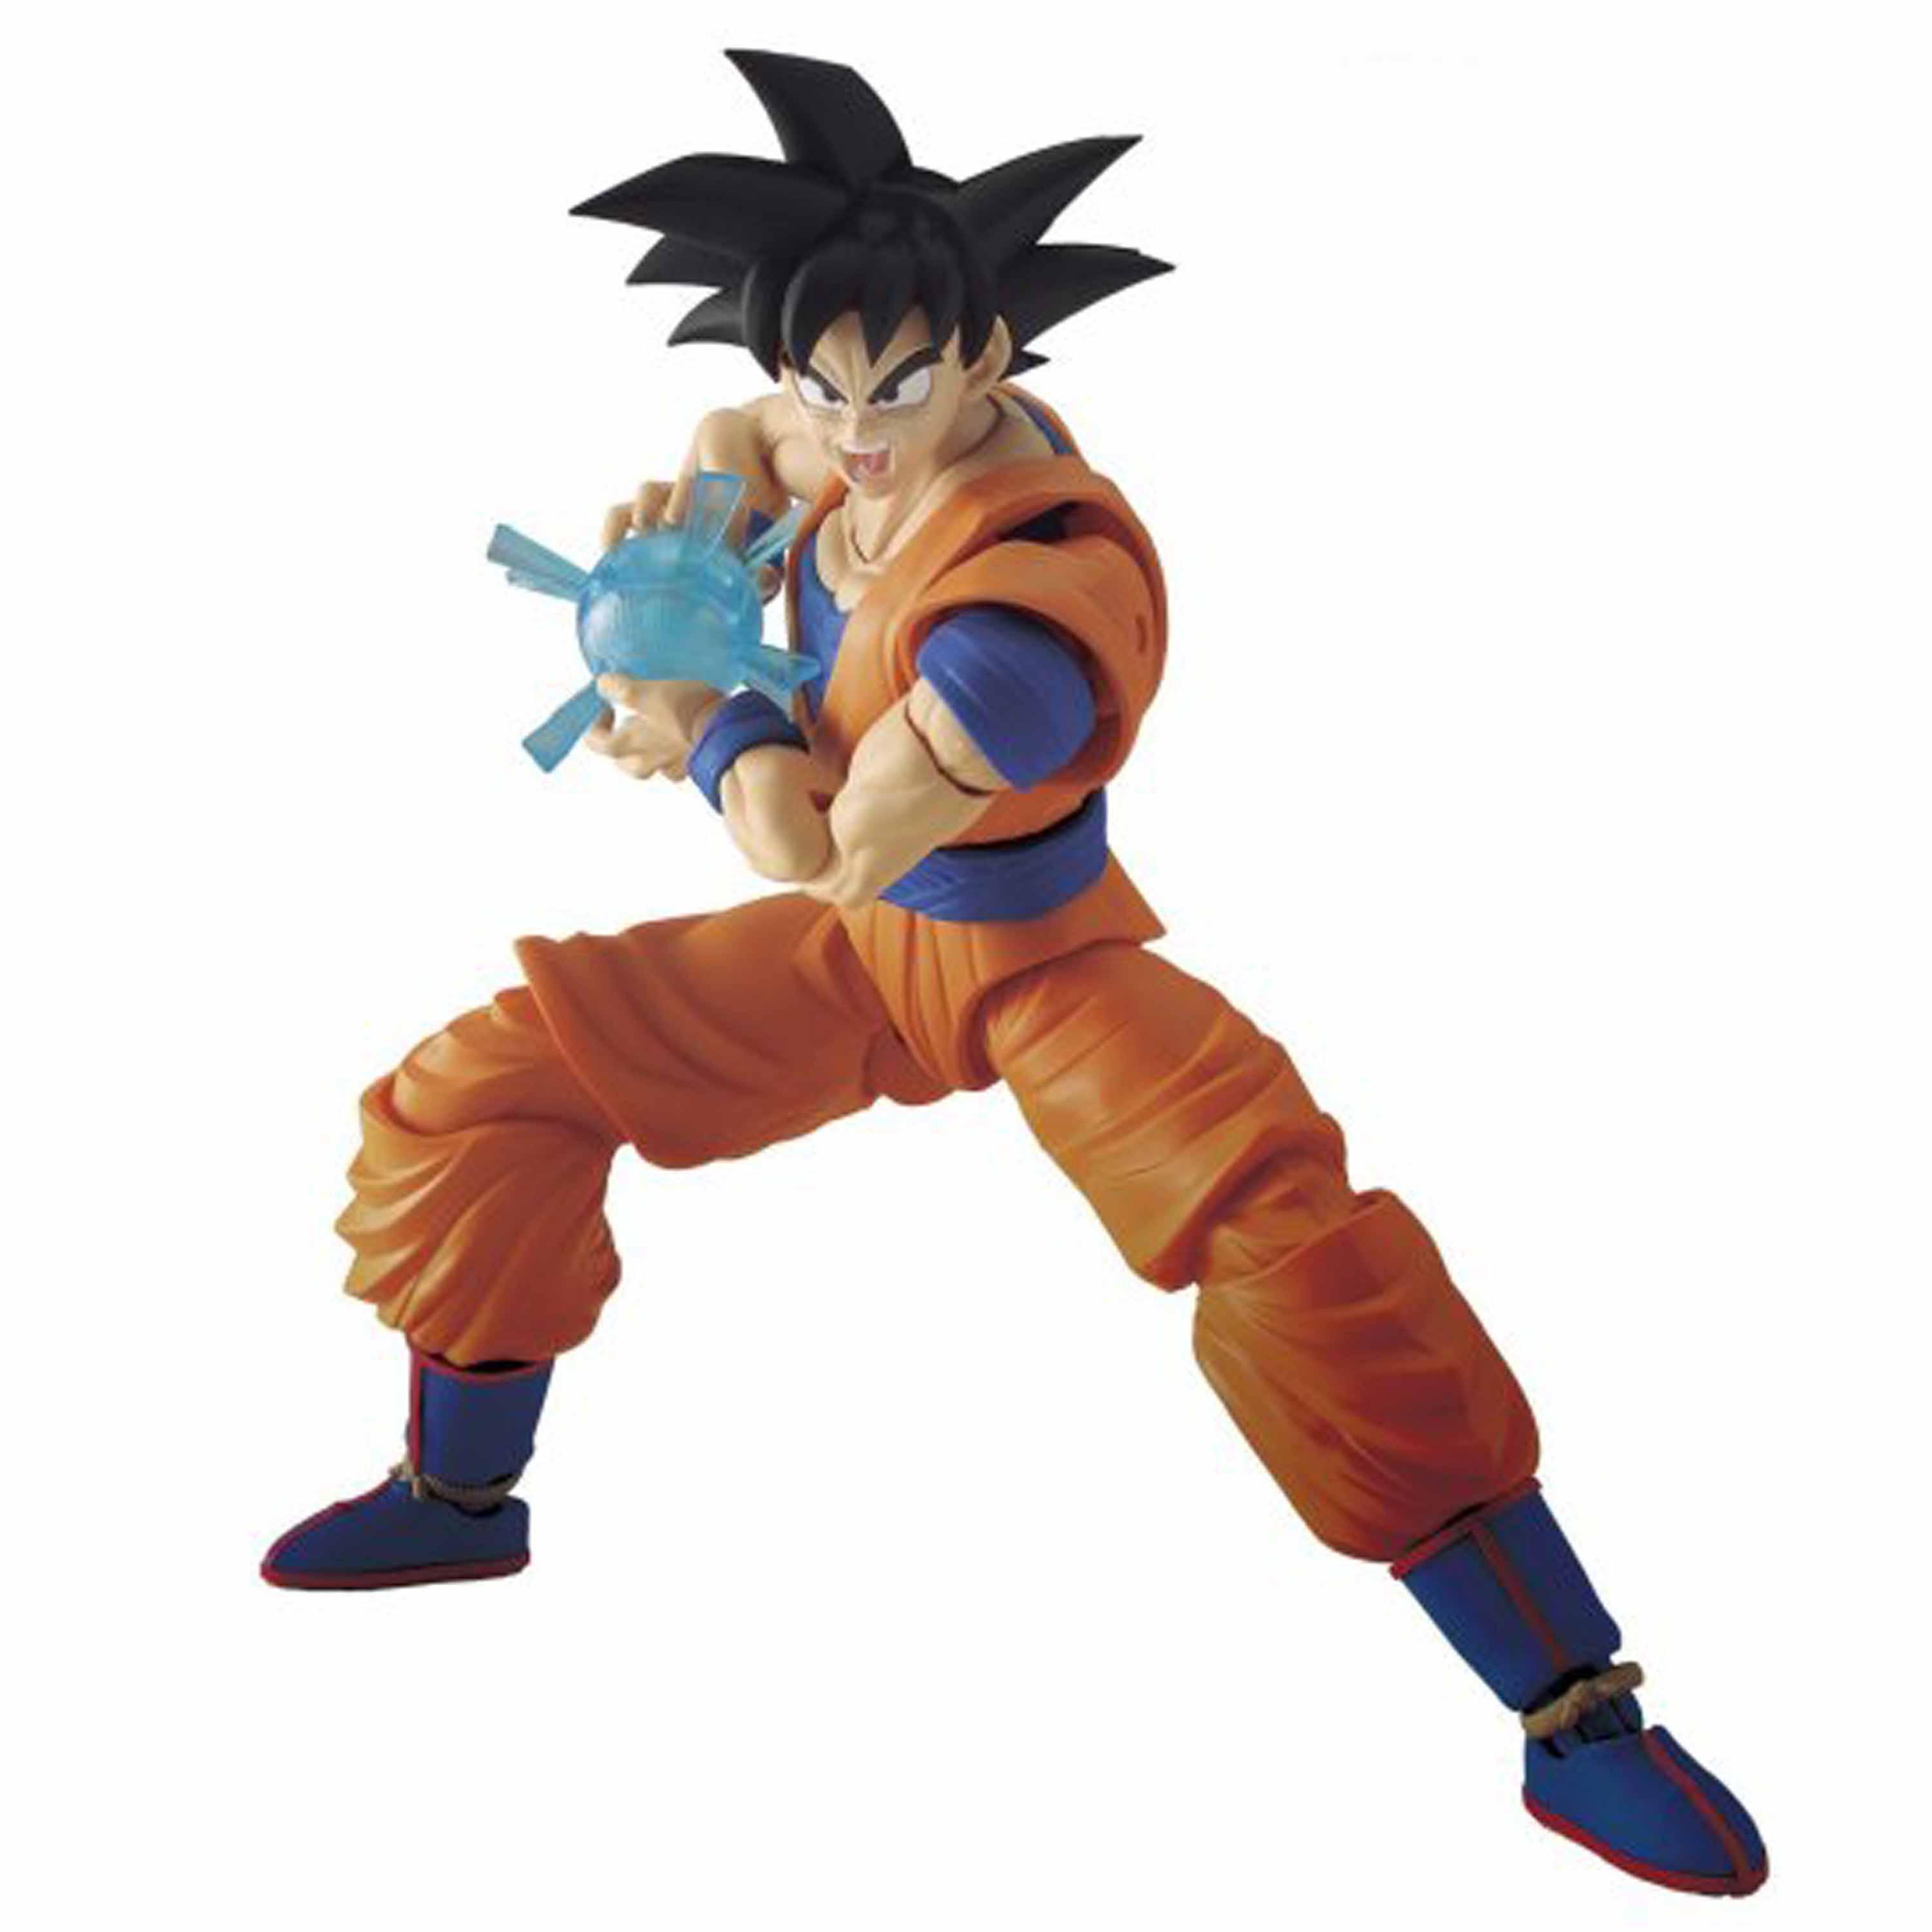 Figure-rise Standard Son Goku